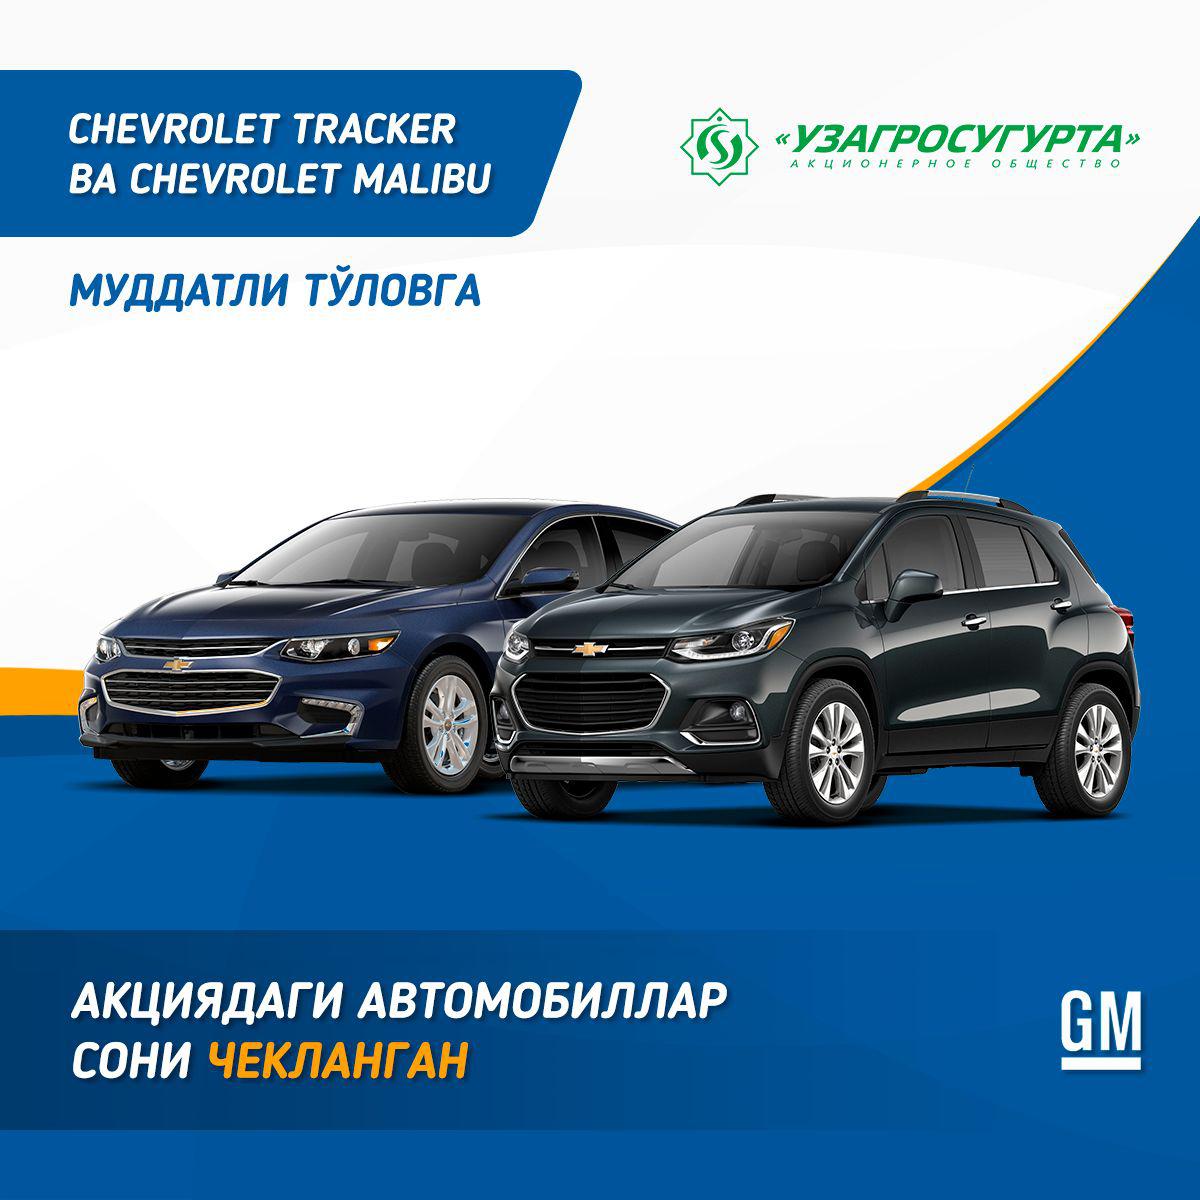 GM Uzbekistan и “Узагросугурта” предлагают купить Tracker по цене Lacetti и Malibu по цене автомобиля Tracker